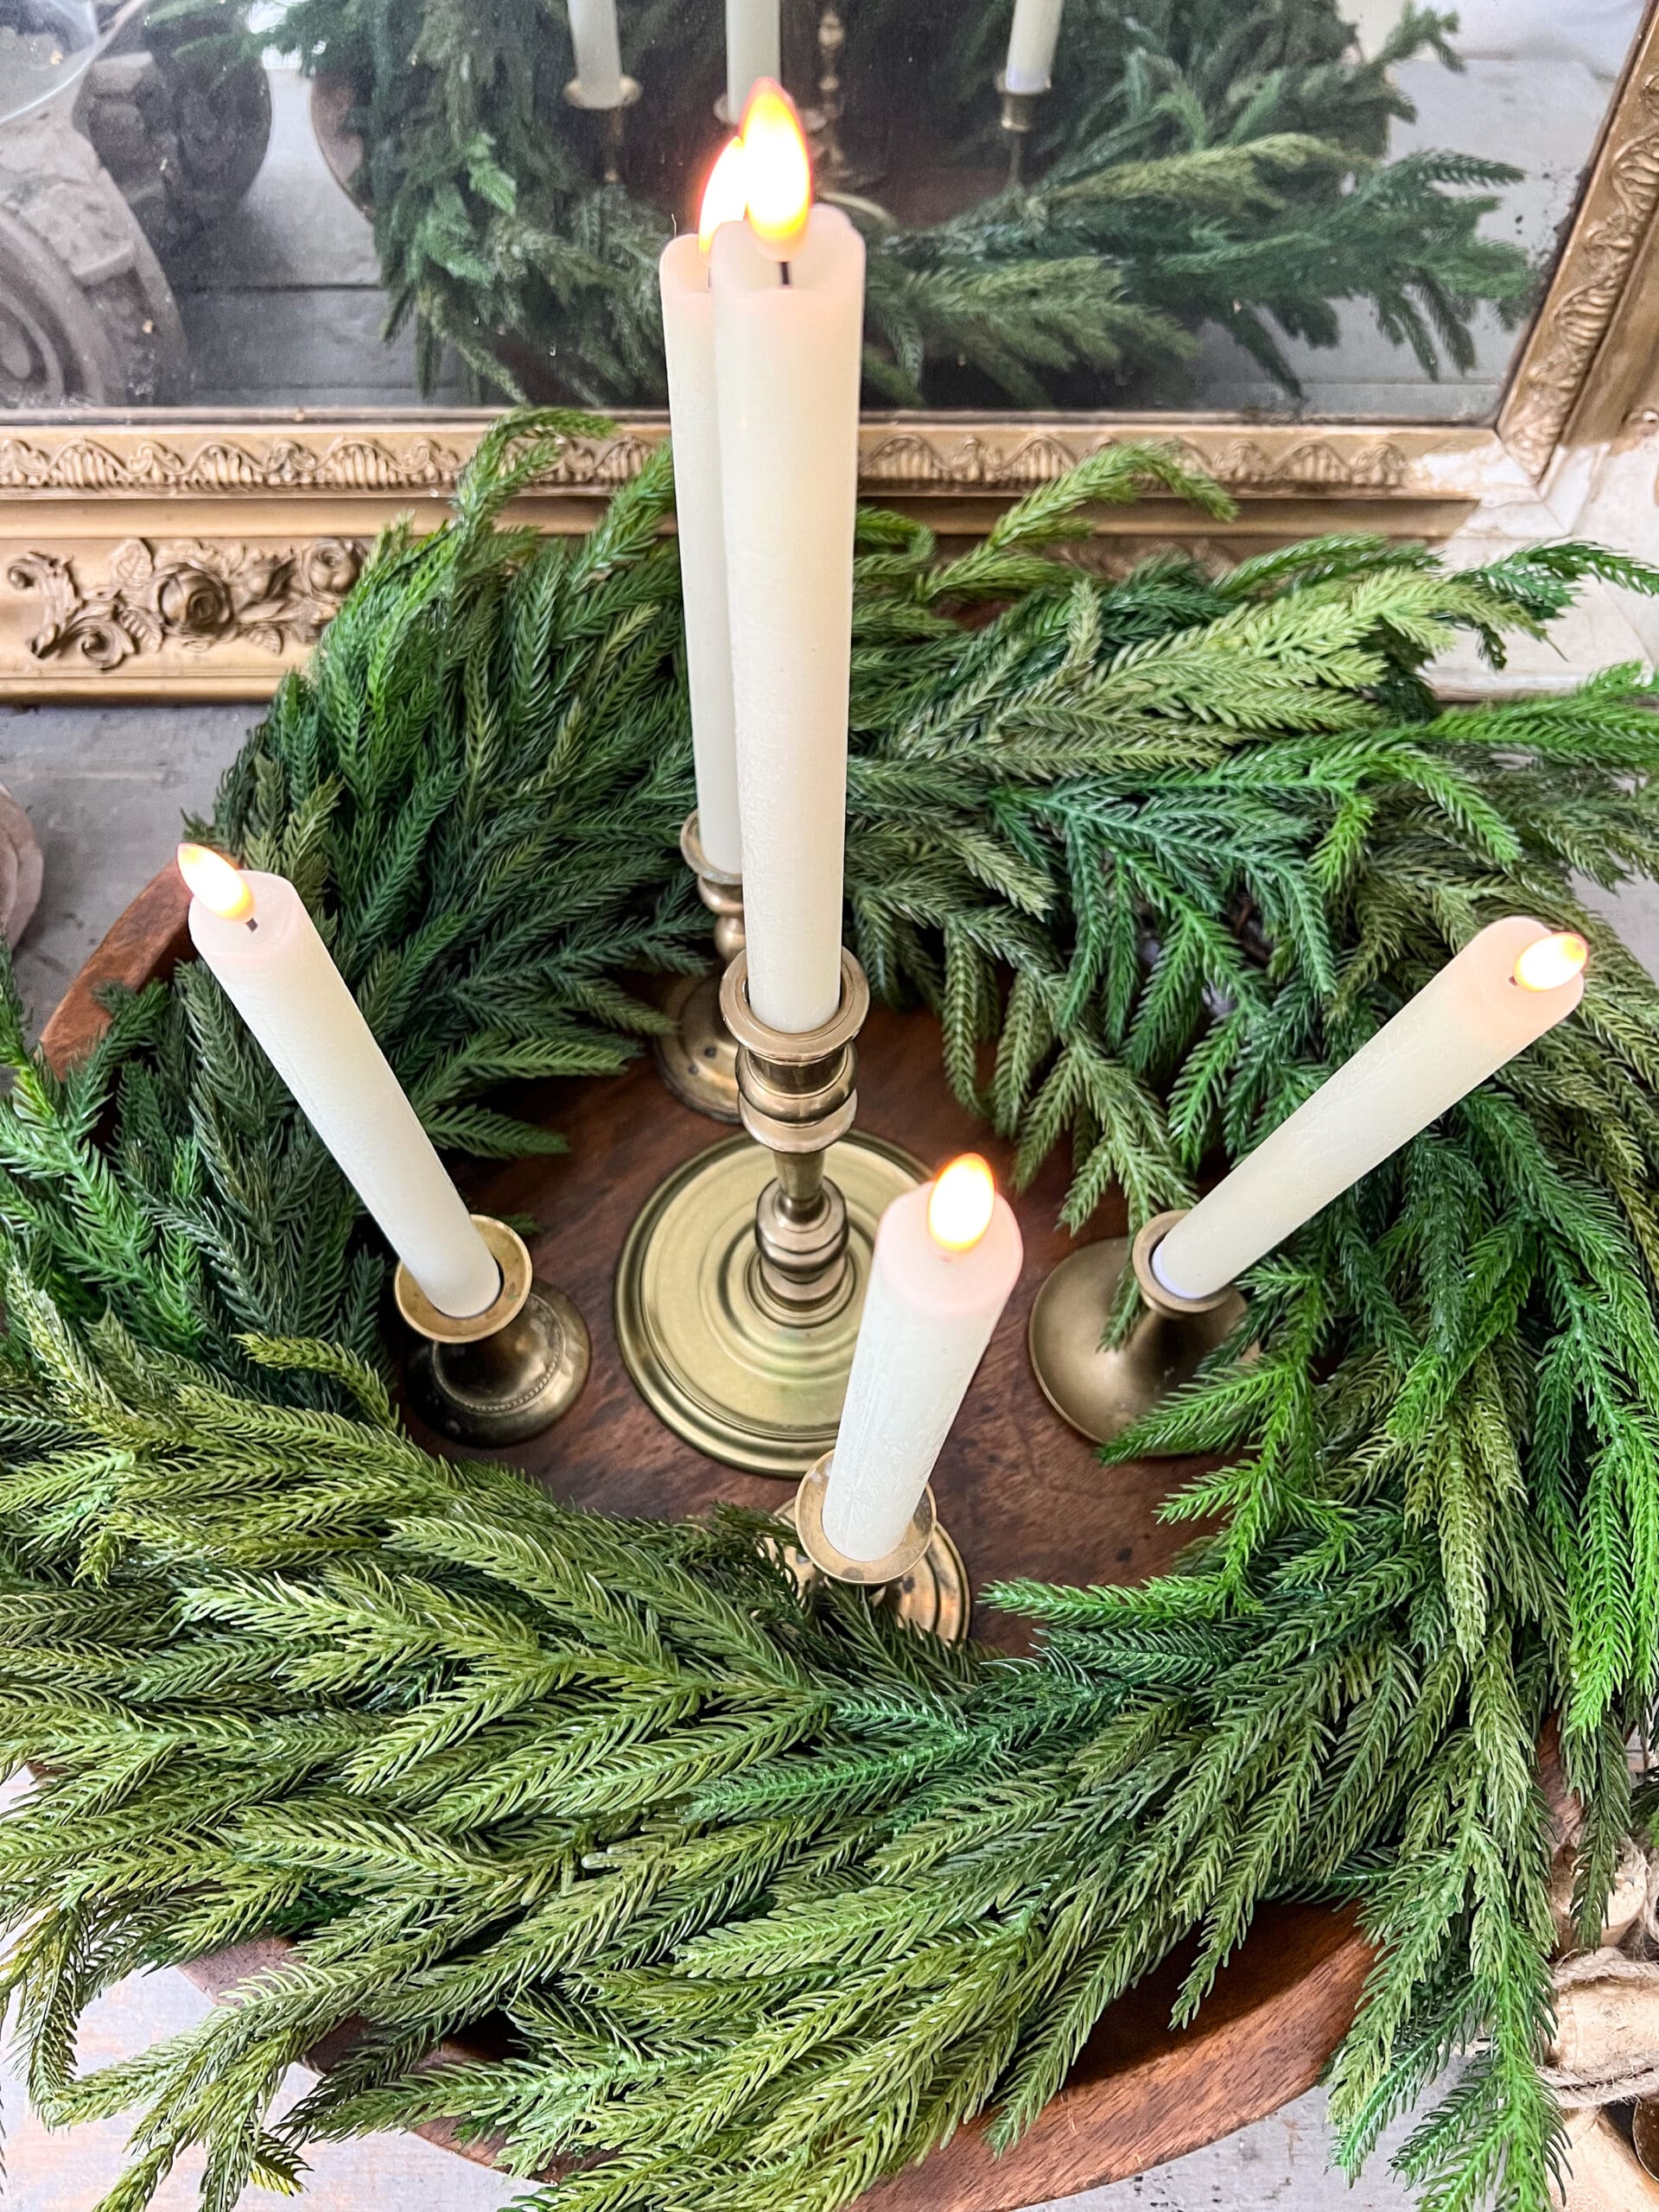 5 candles on golden candlesticks inside the wreath